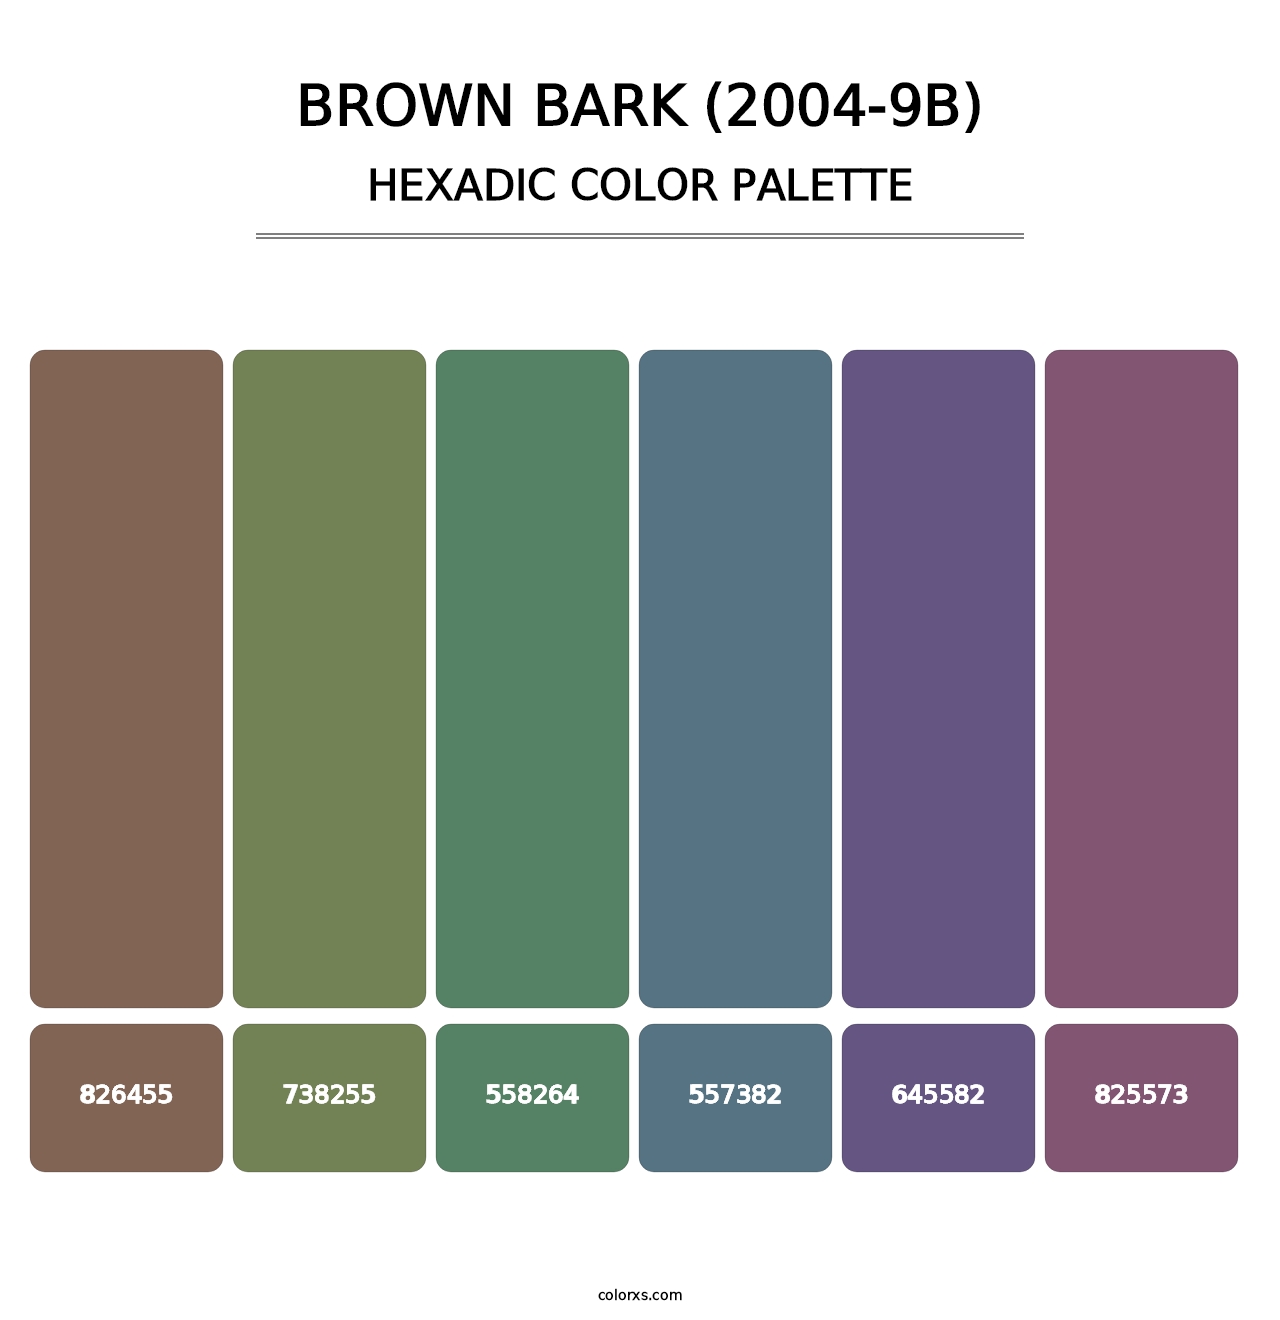 Brown Bark (2004-9B) - Hexadic Color Palette